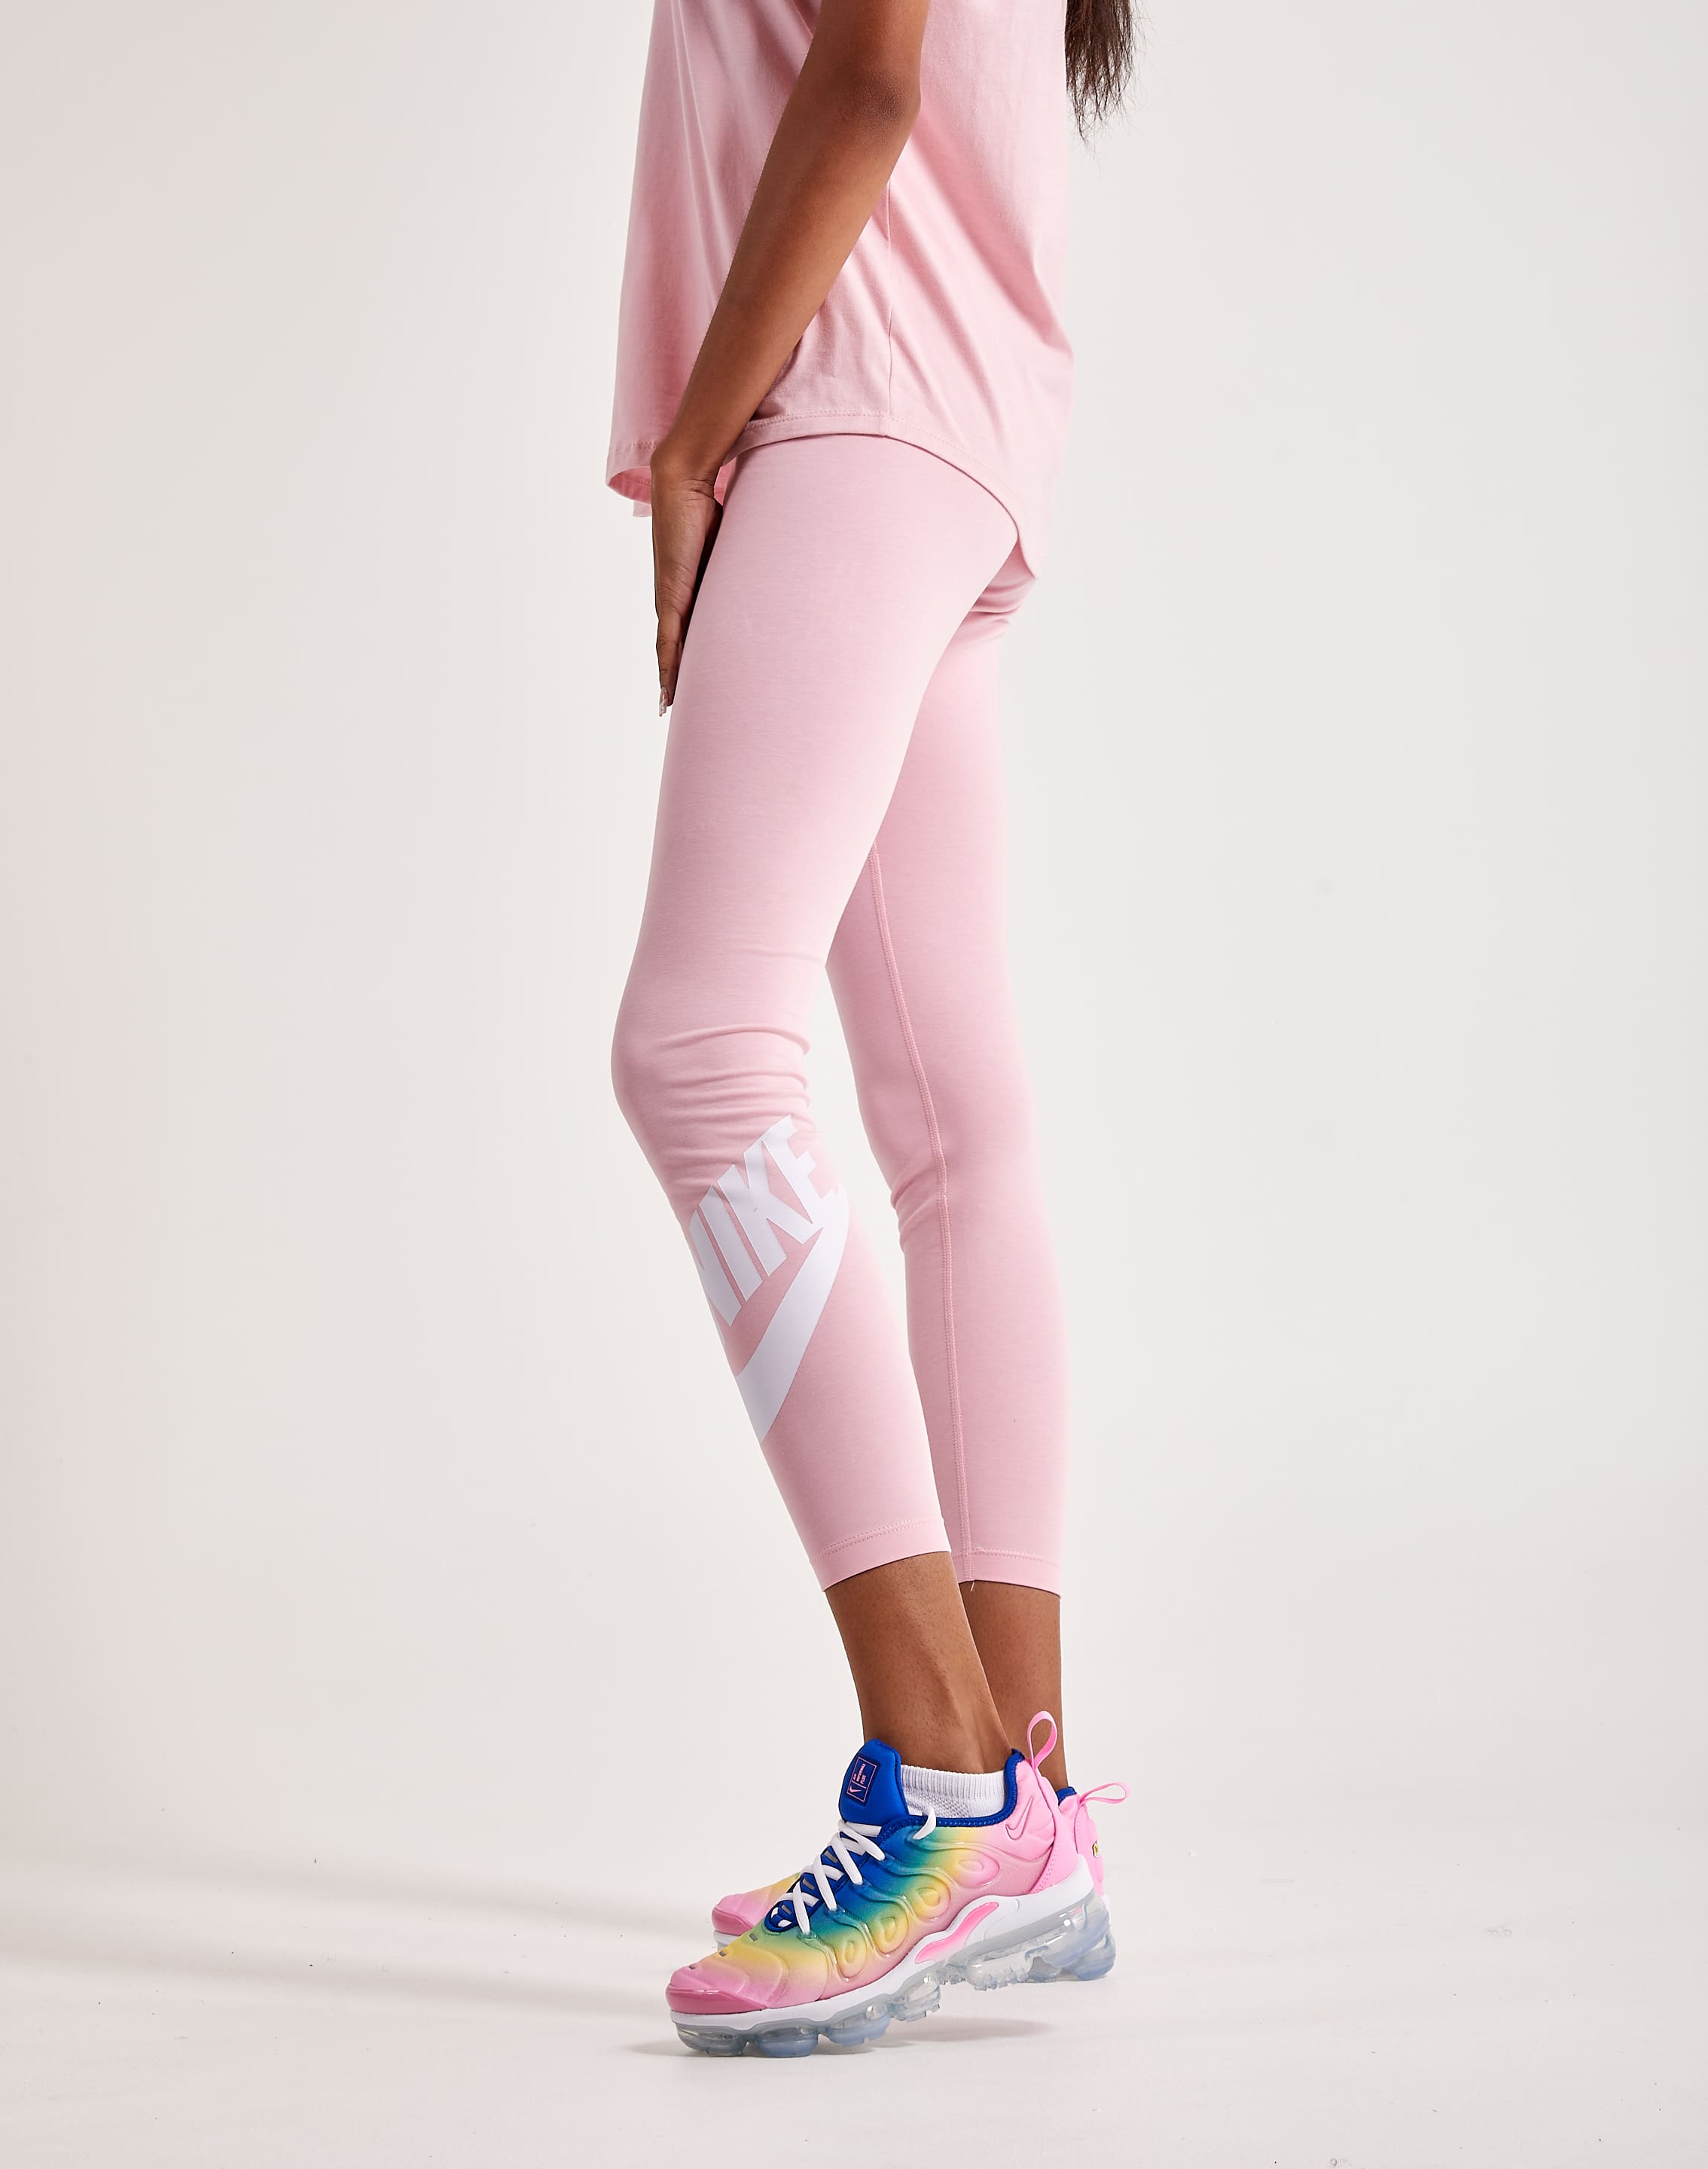 Nike Sportswear Classics Women's Graphic High-Waisted Leggings